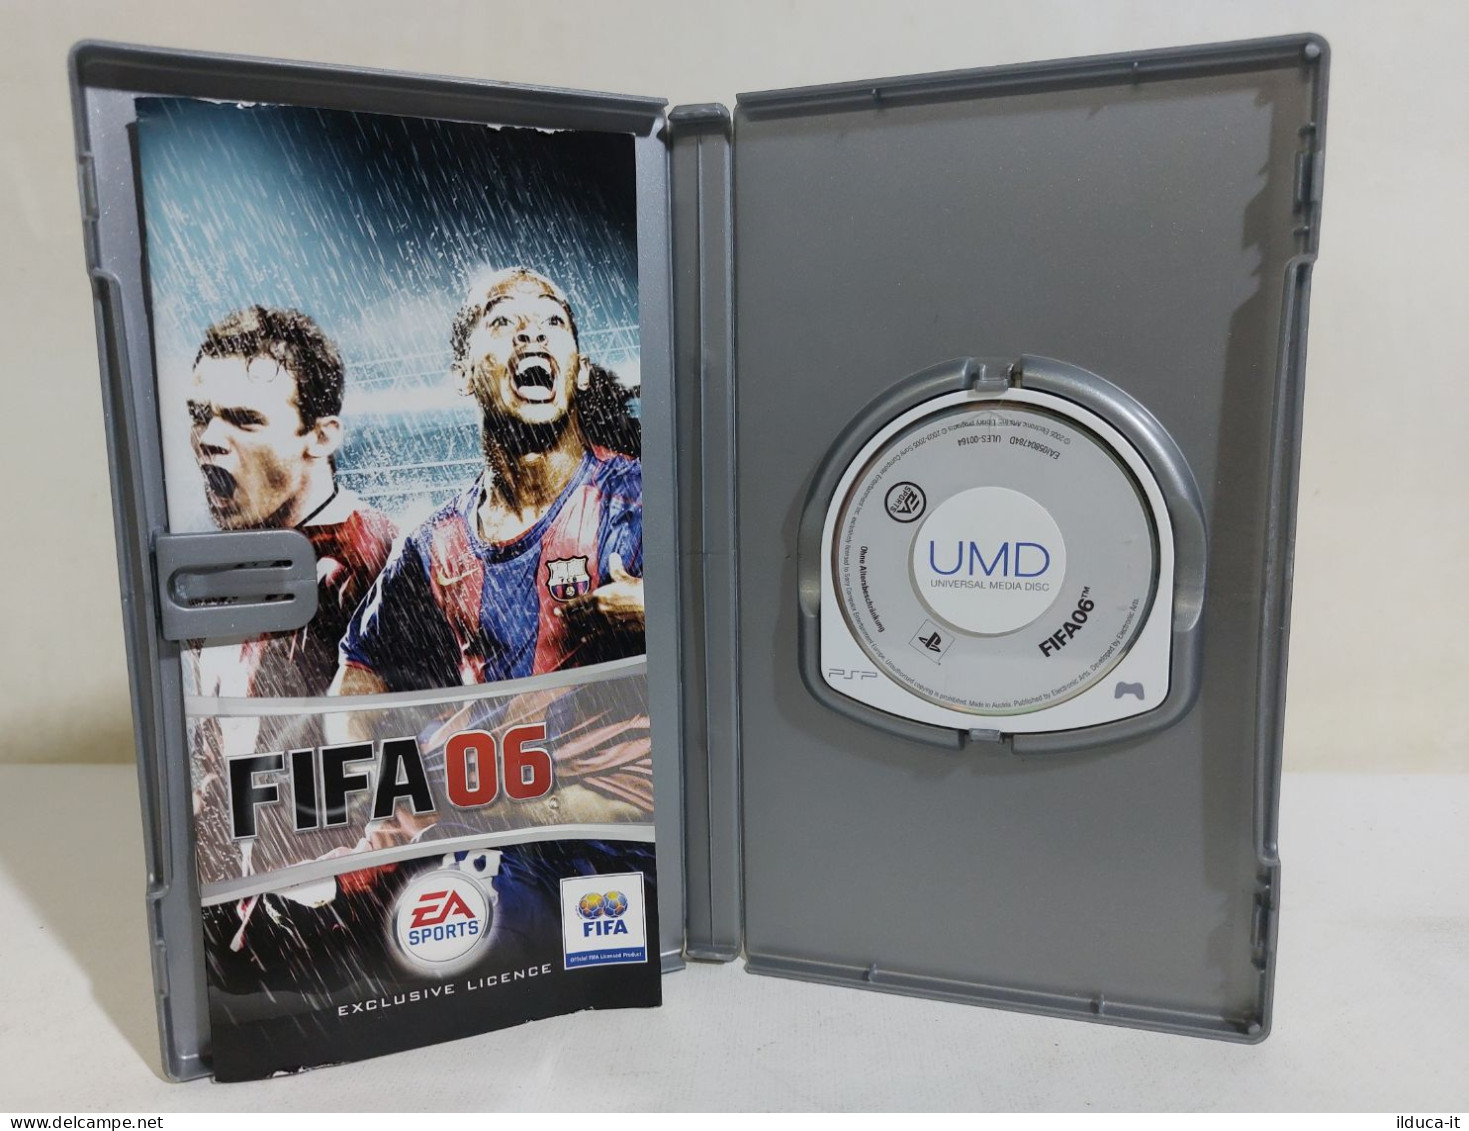 32426 Play Station PSP Game - FIFA 06 Platinum - EA Sports - PSP